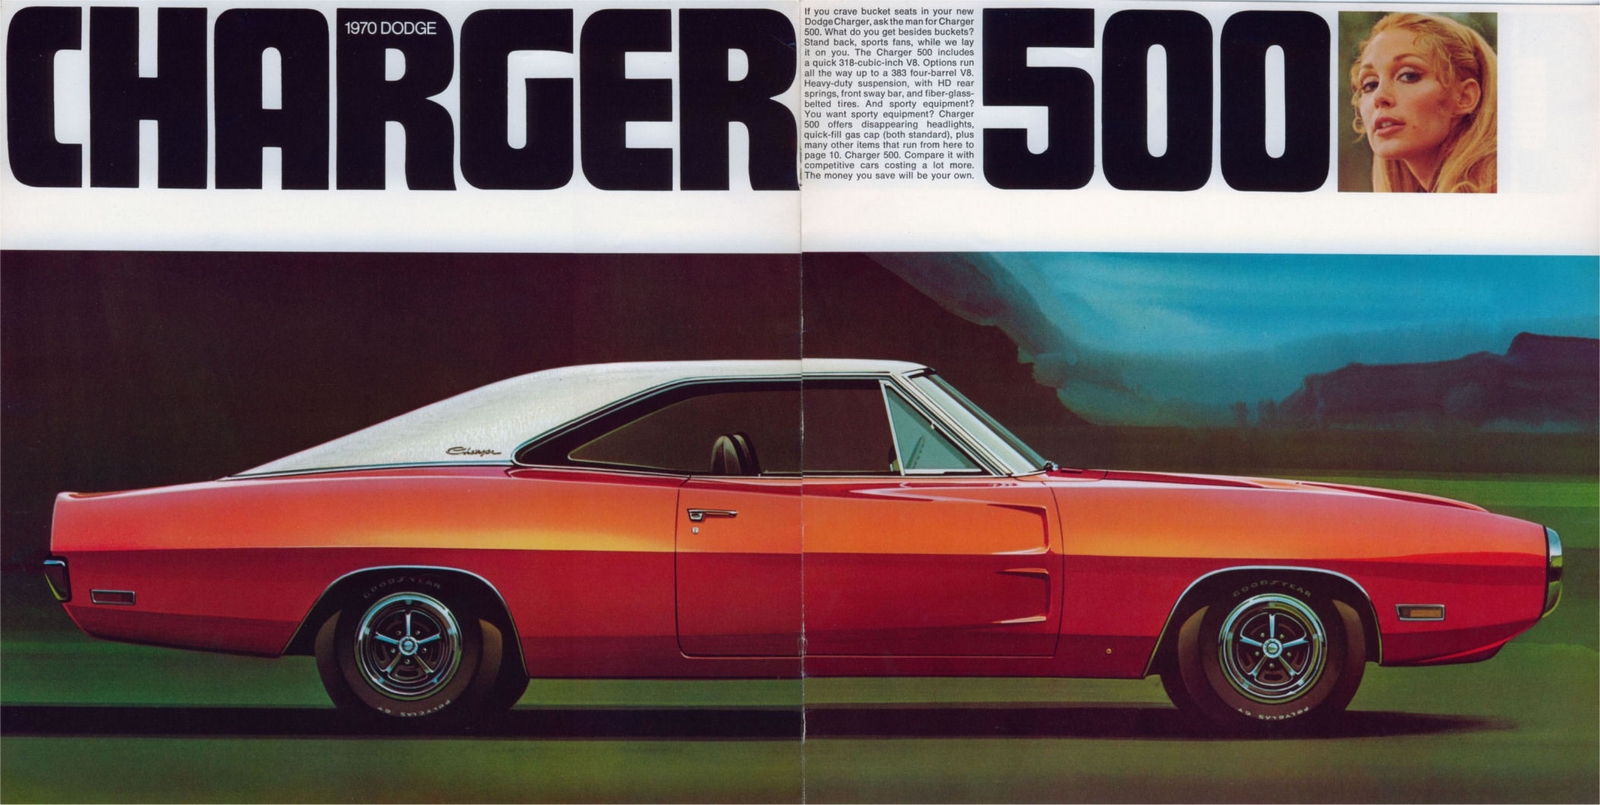 n_1970 Dodge Charger-04-05.jpg